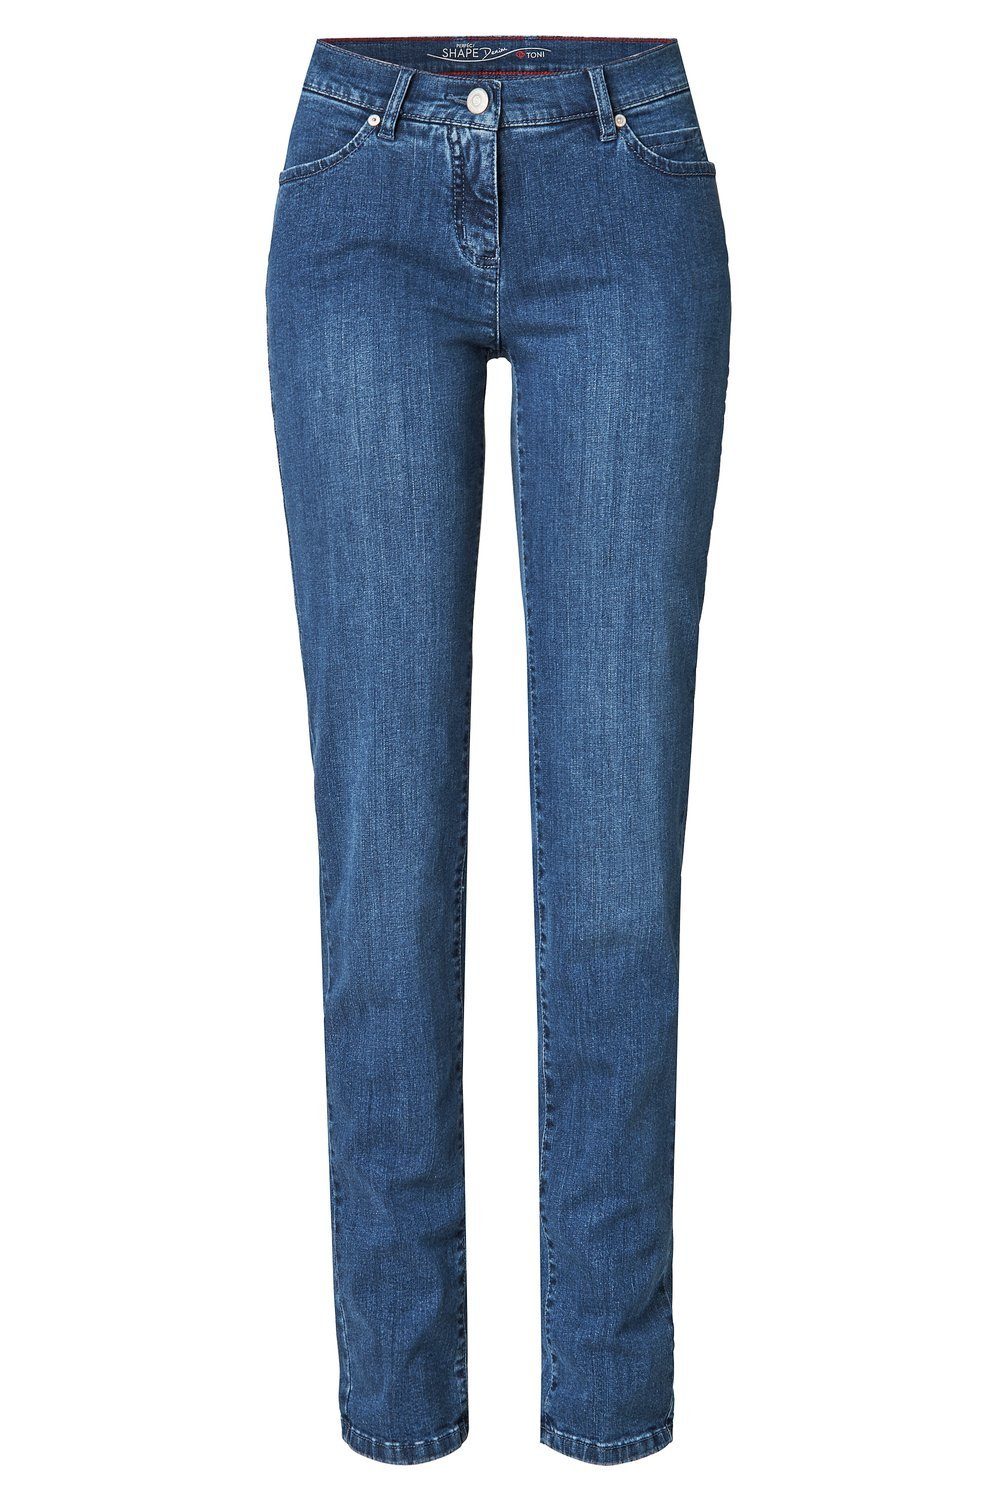 502 Perfect Slim TONI Jeans Bequeme Shape